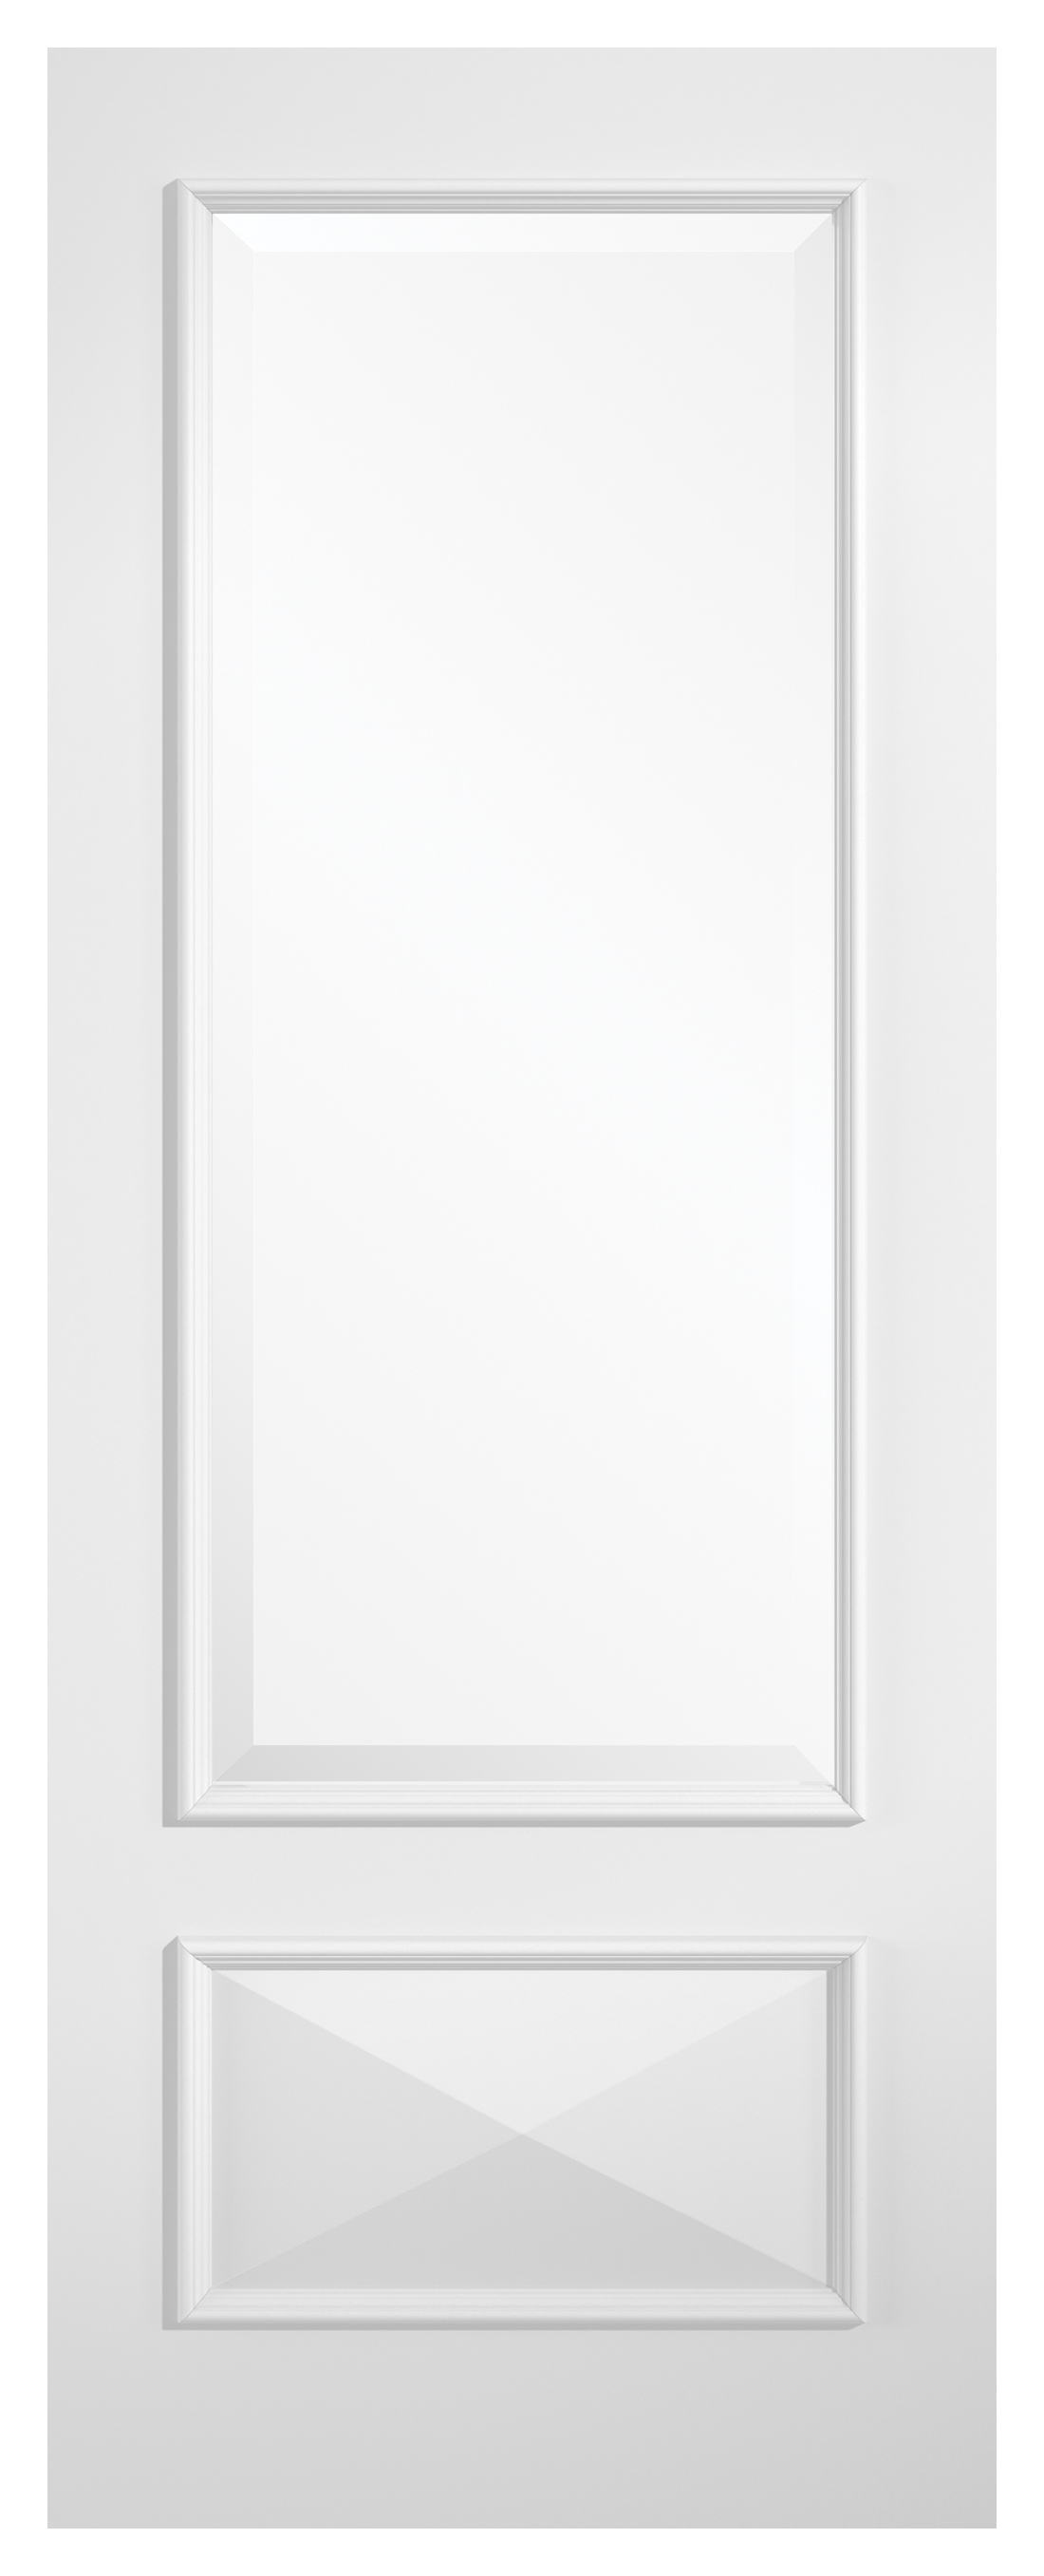 Image of LPD Internal Knightsbridge 1 Panel Primed Plus White Solid Core Door - 838 x 1981mm